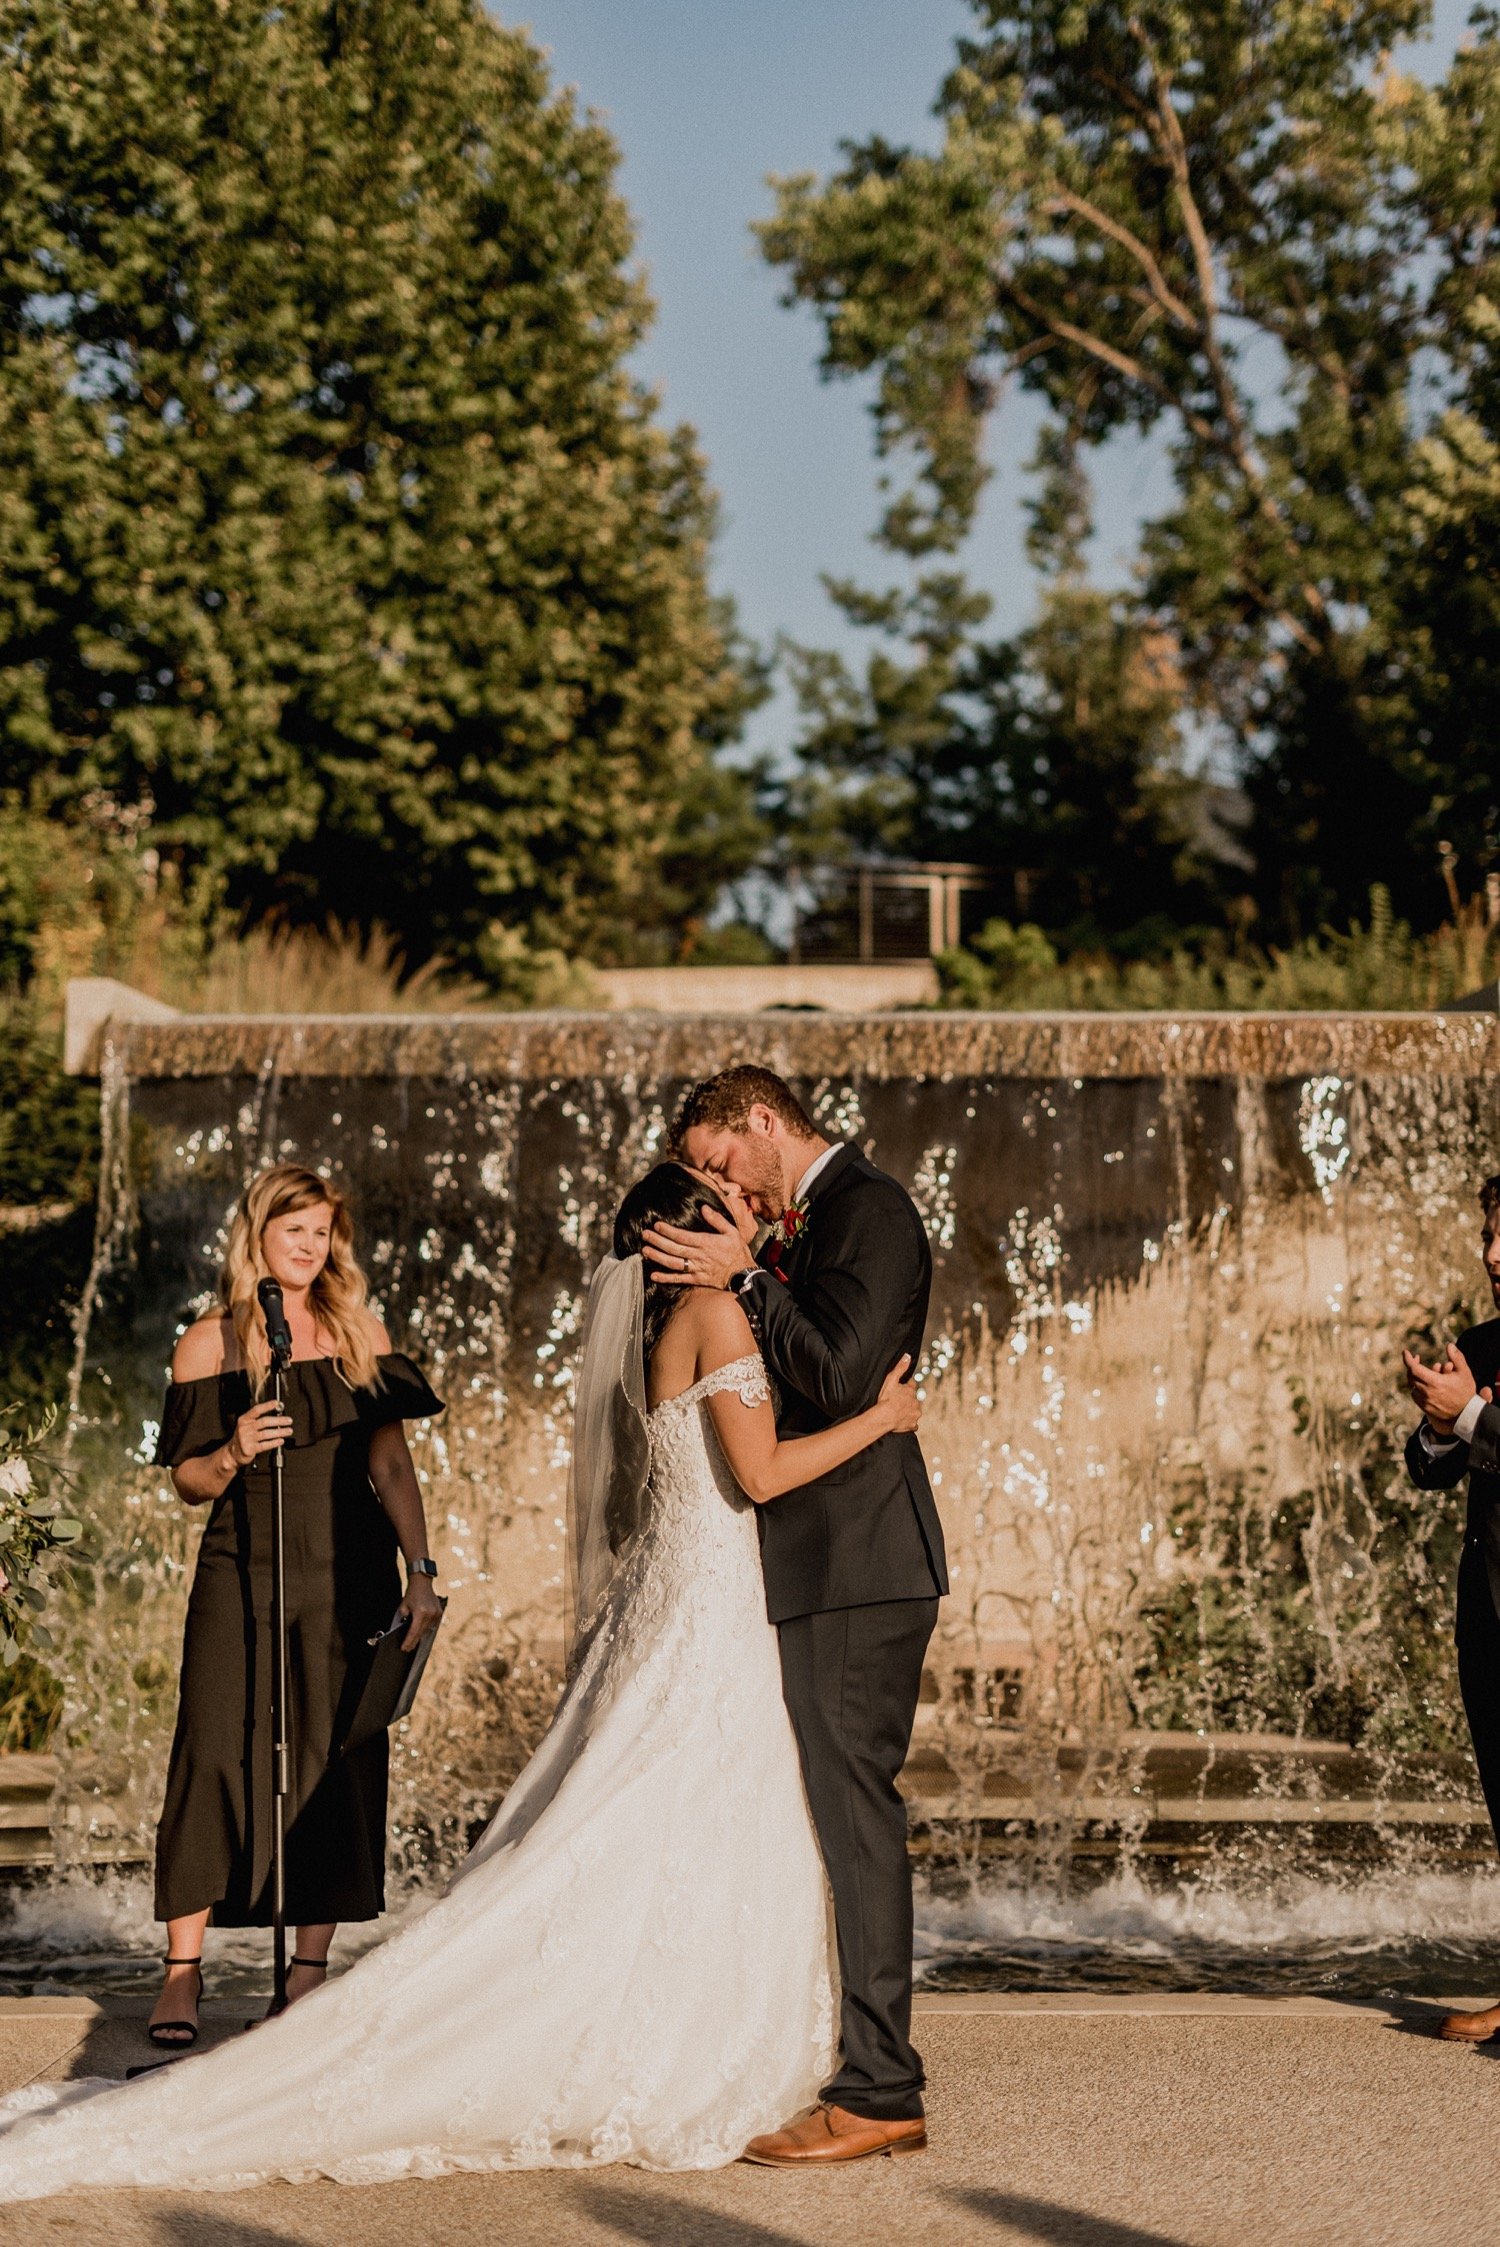 First-kiss-outdoor-waterfall-wedding-ceremony-at-Des-Moines-iowa-botanical-garden.jpg.jpg